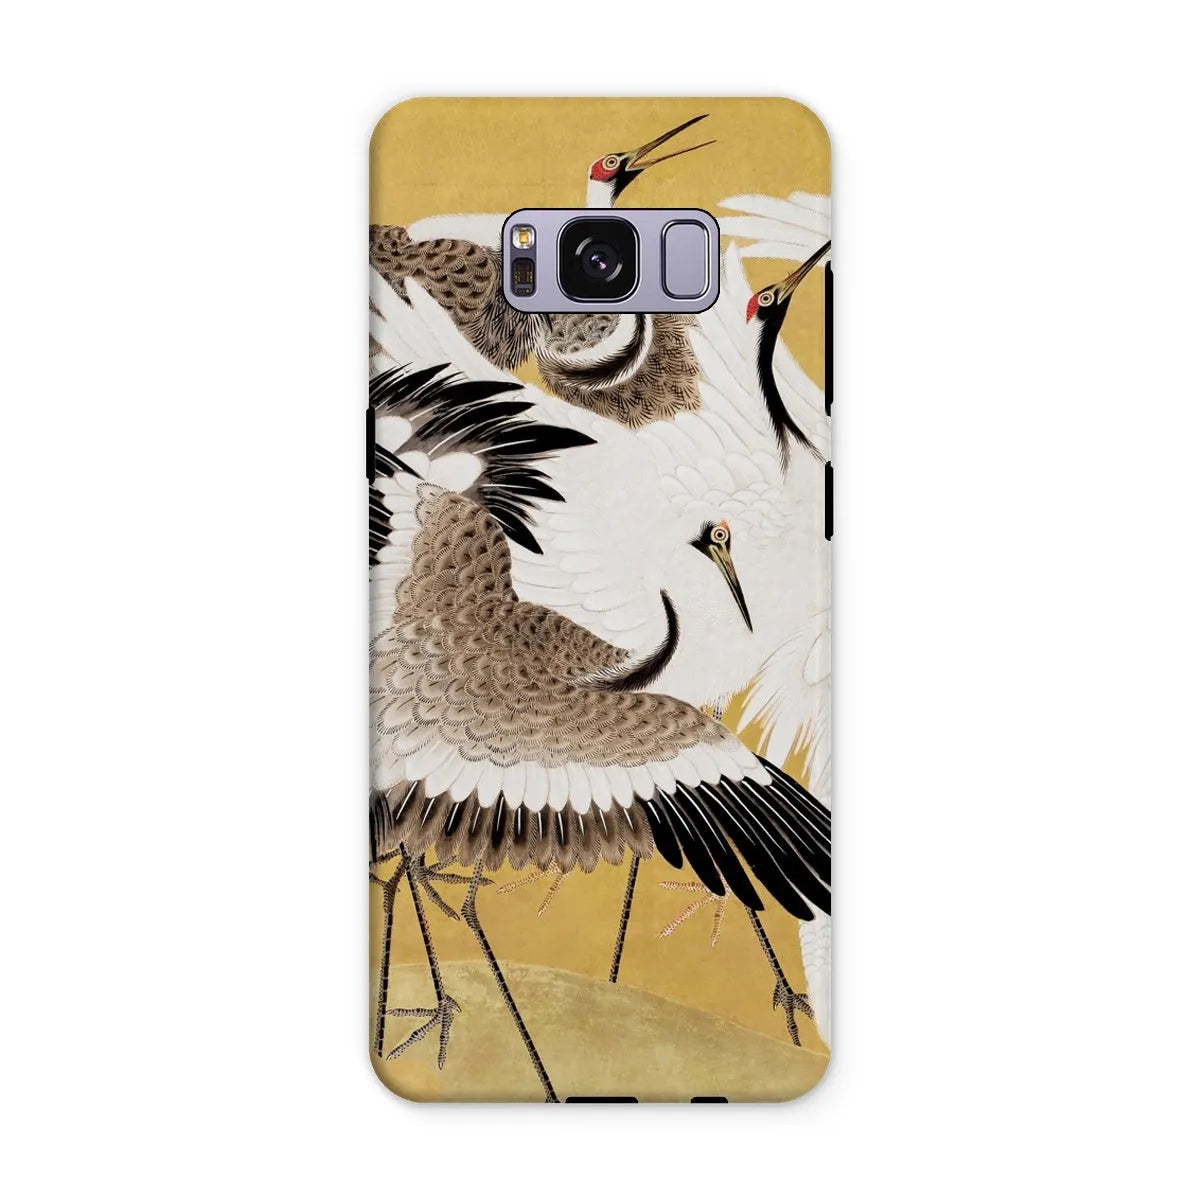 Flock Of Cranes Japanese Bird Art Phone Case - Ishida Yūtei - Samsung Galaxy S8 Plus / Matte - Mobile Phone Cases